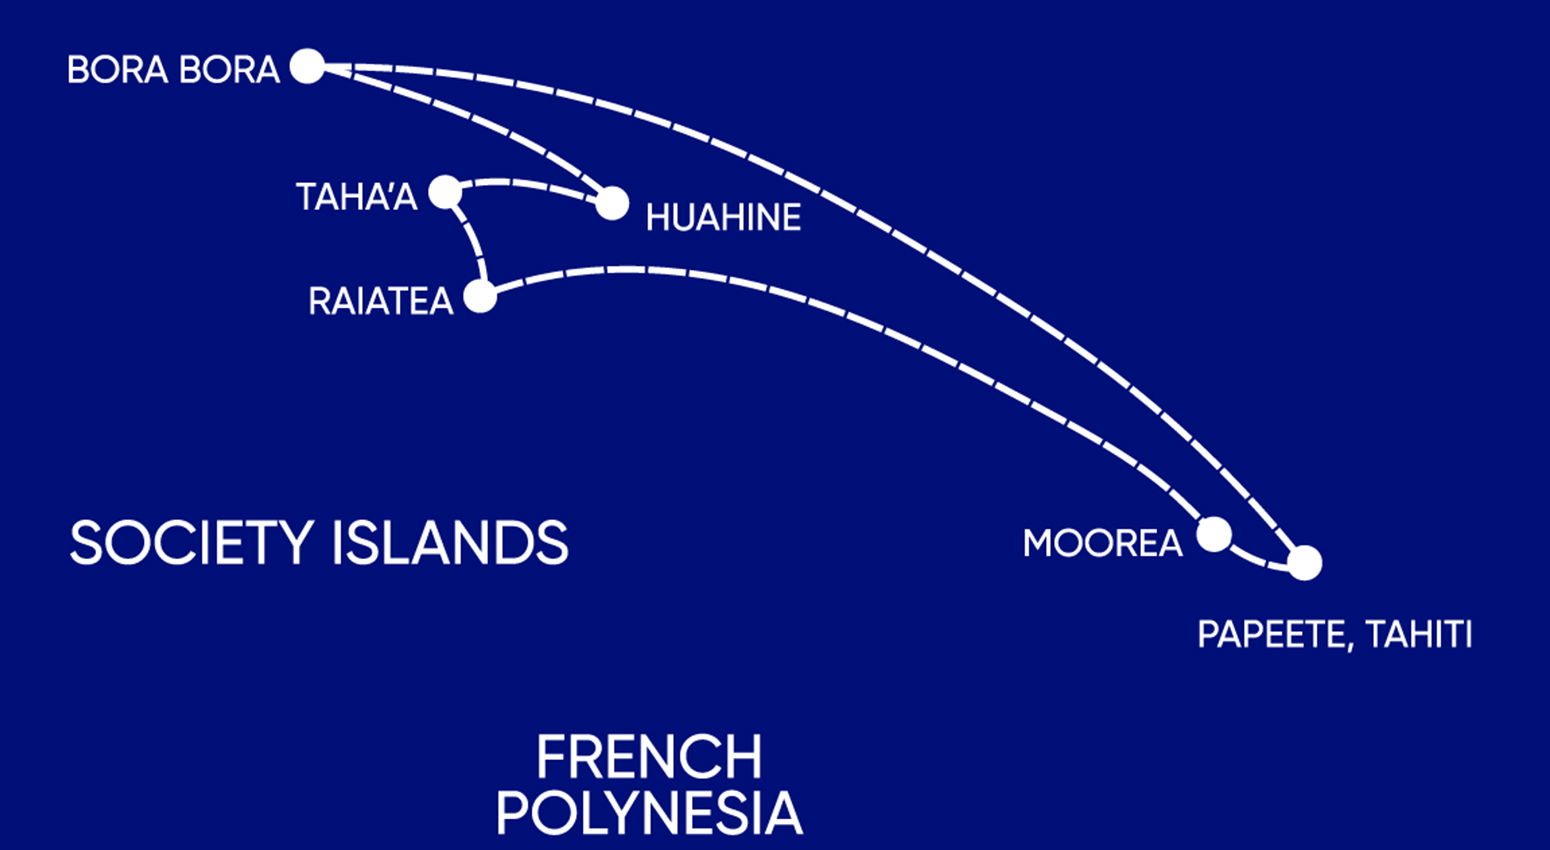 A cruise map at the tropical islands of Tahiti